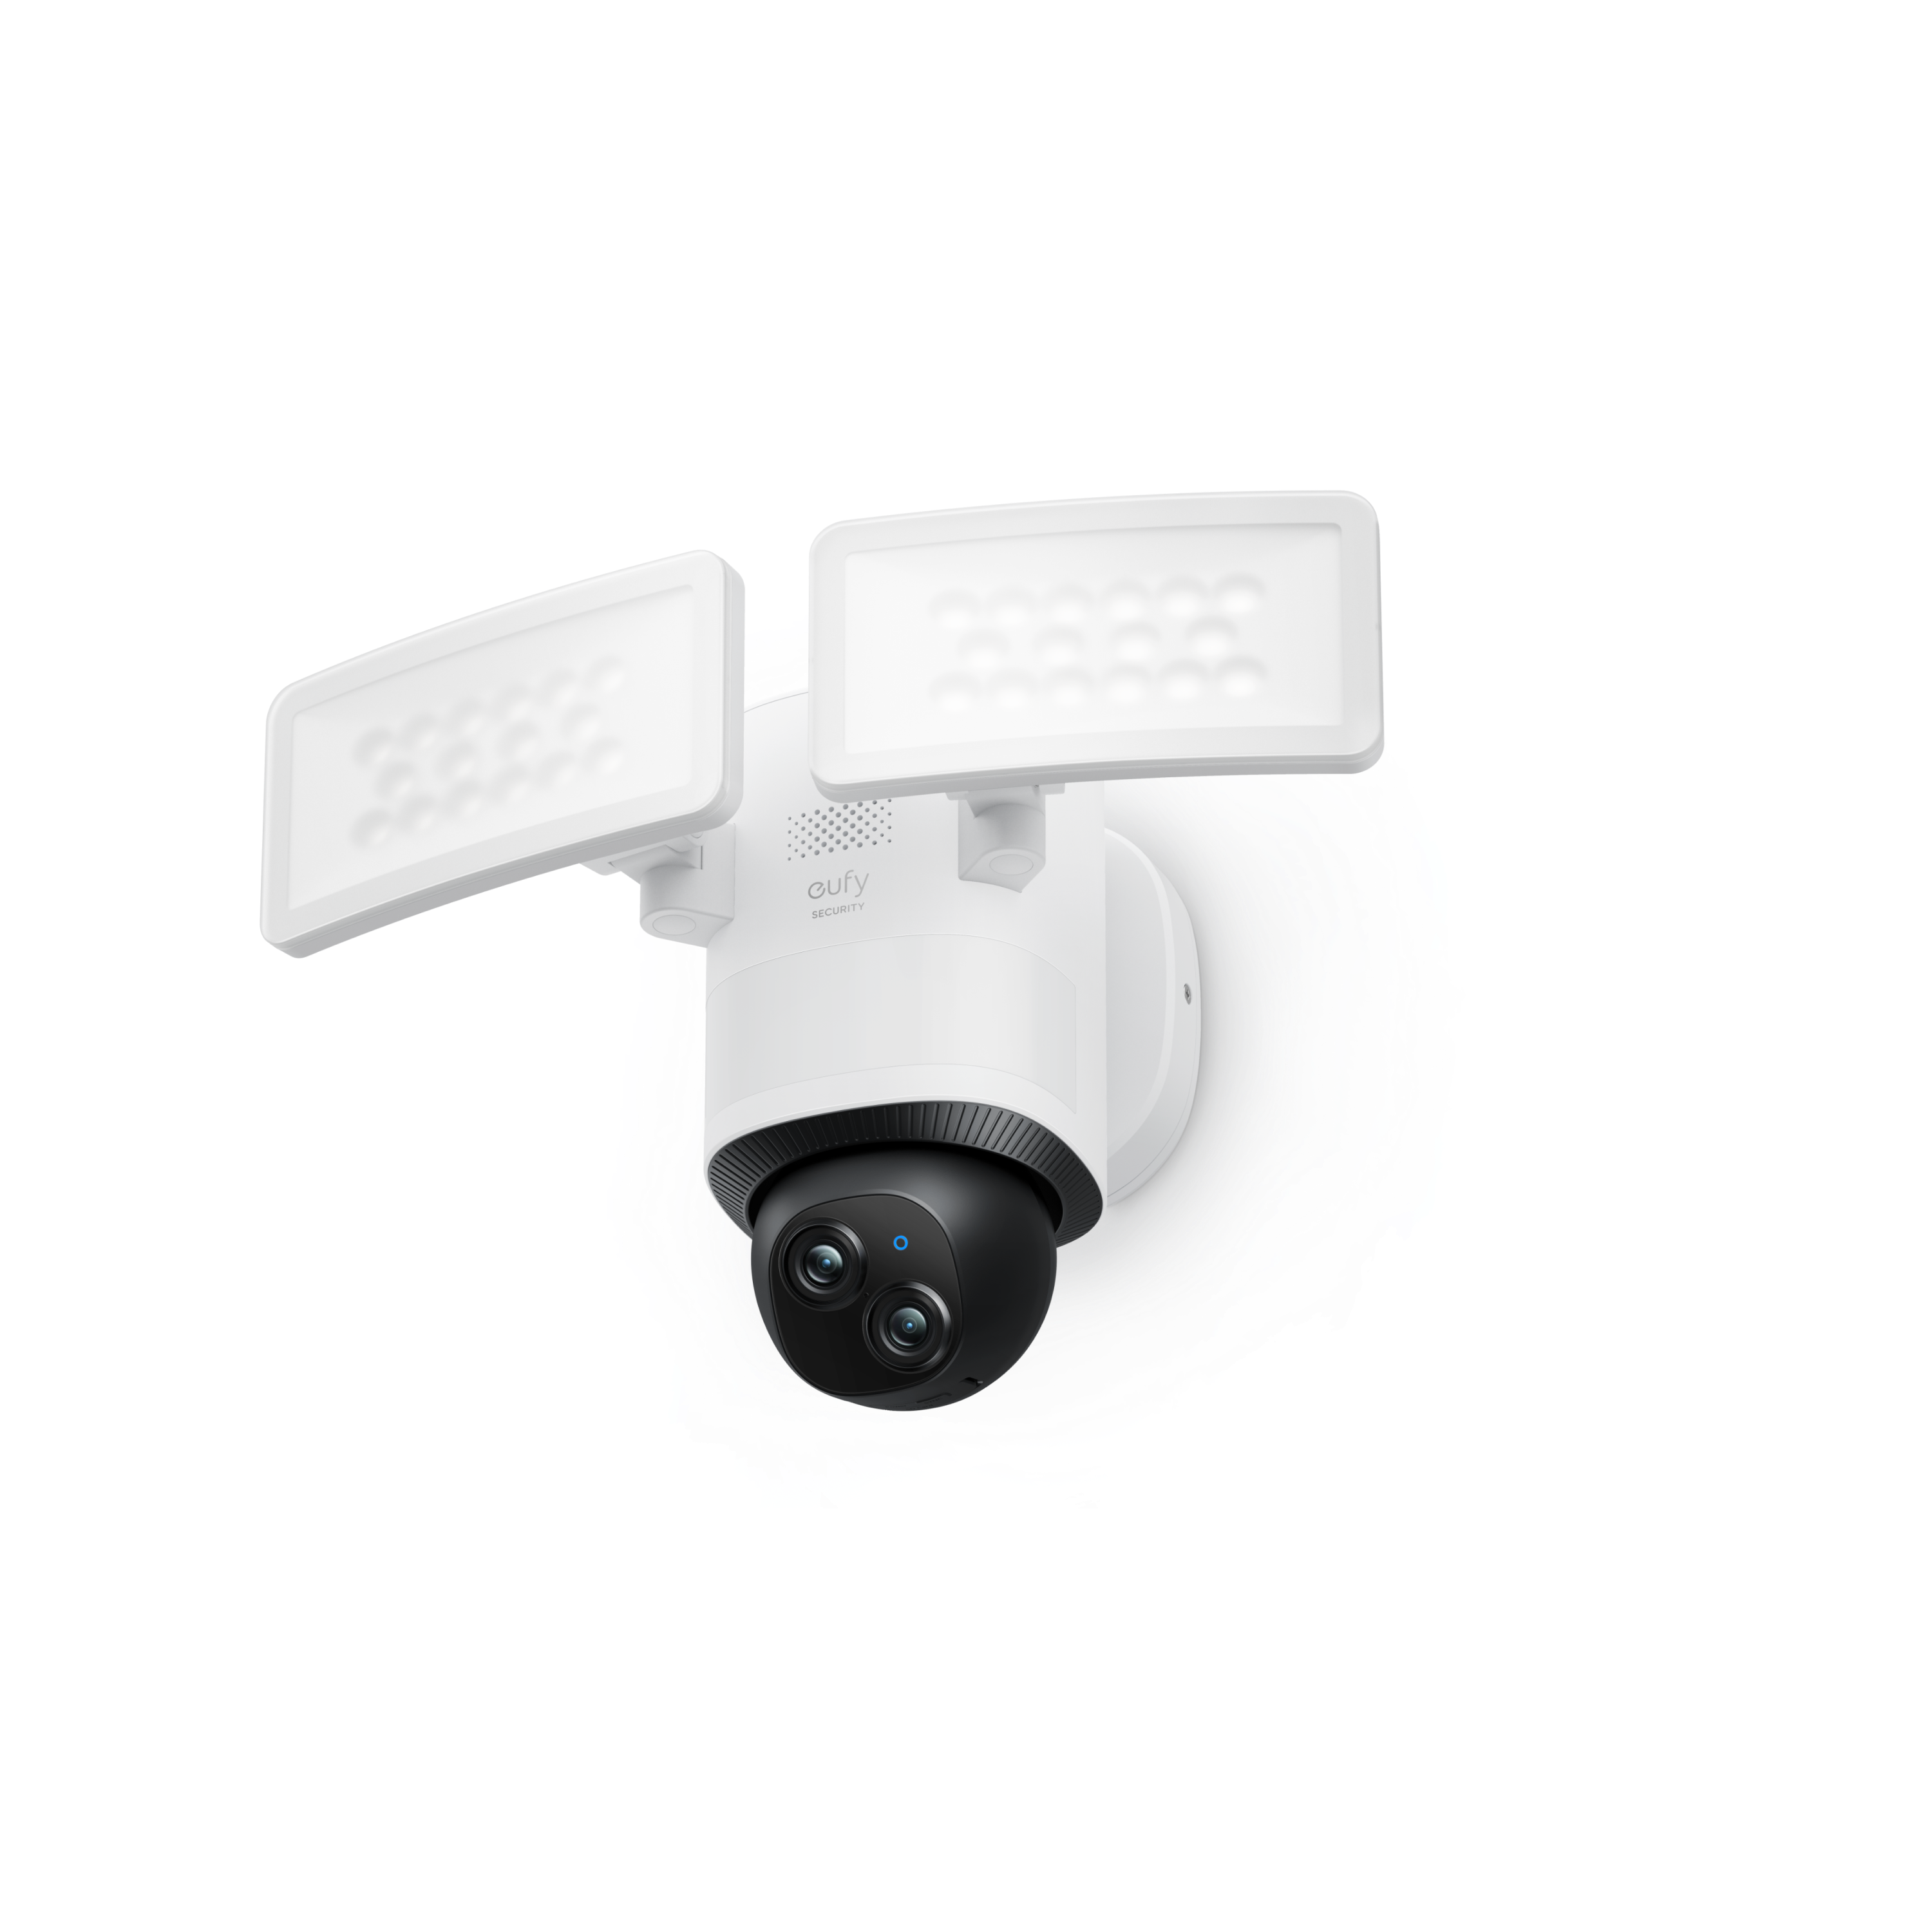 Floodlight Cameras: Advanced Security & Monitoring - eufy US | eufy CA